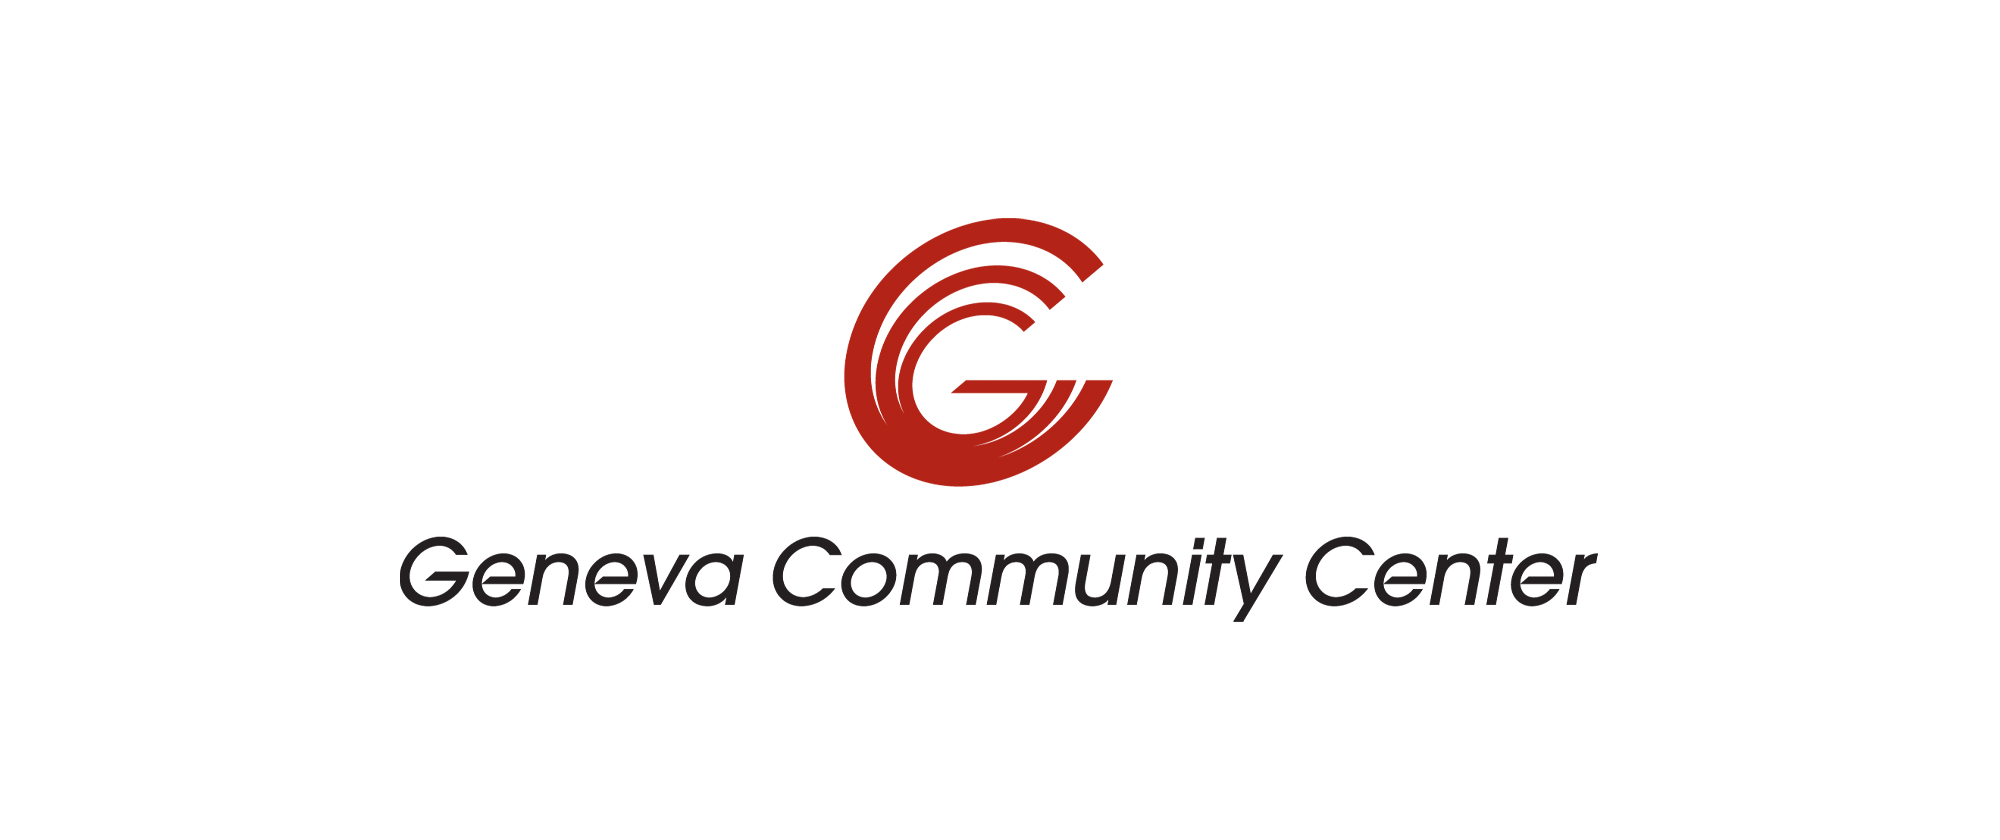 Geneva Community Center Inhouse News